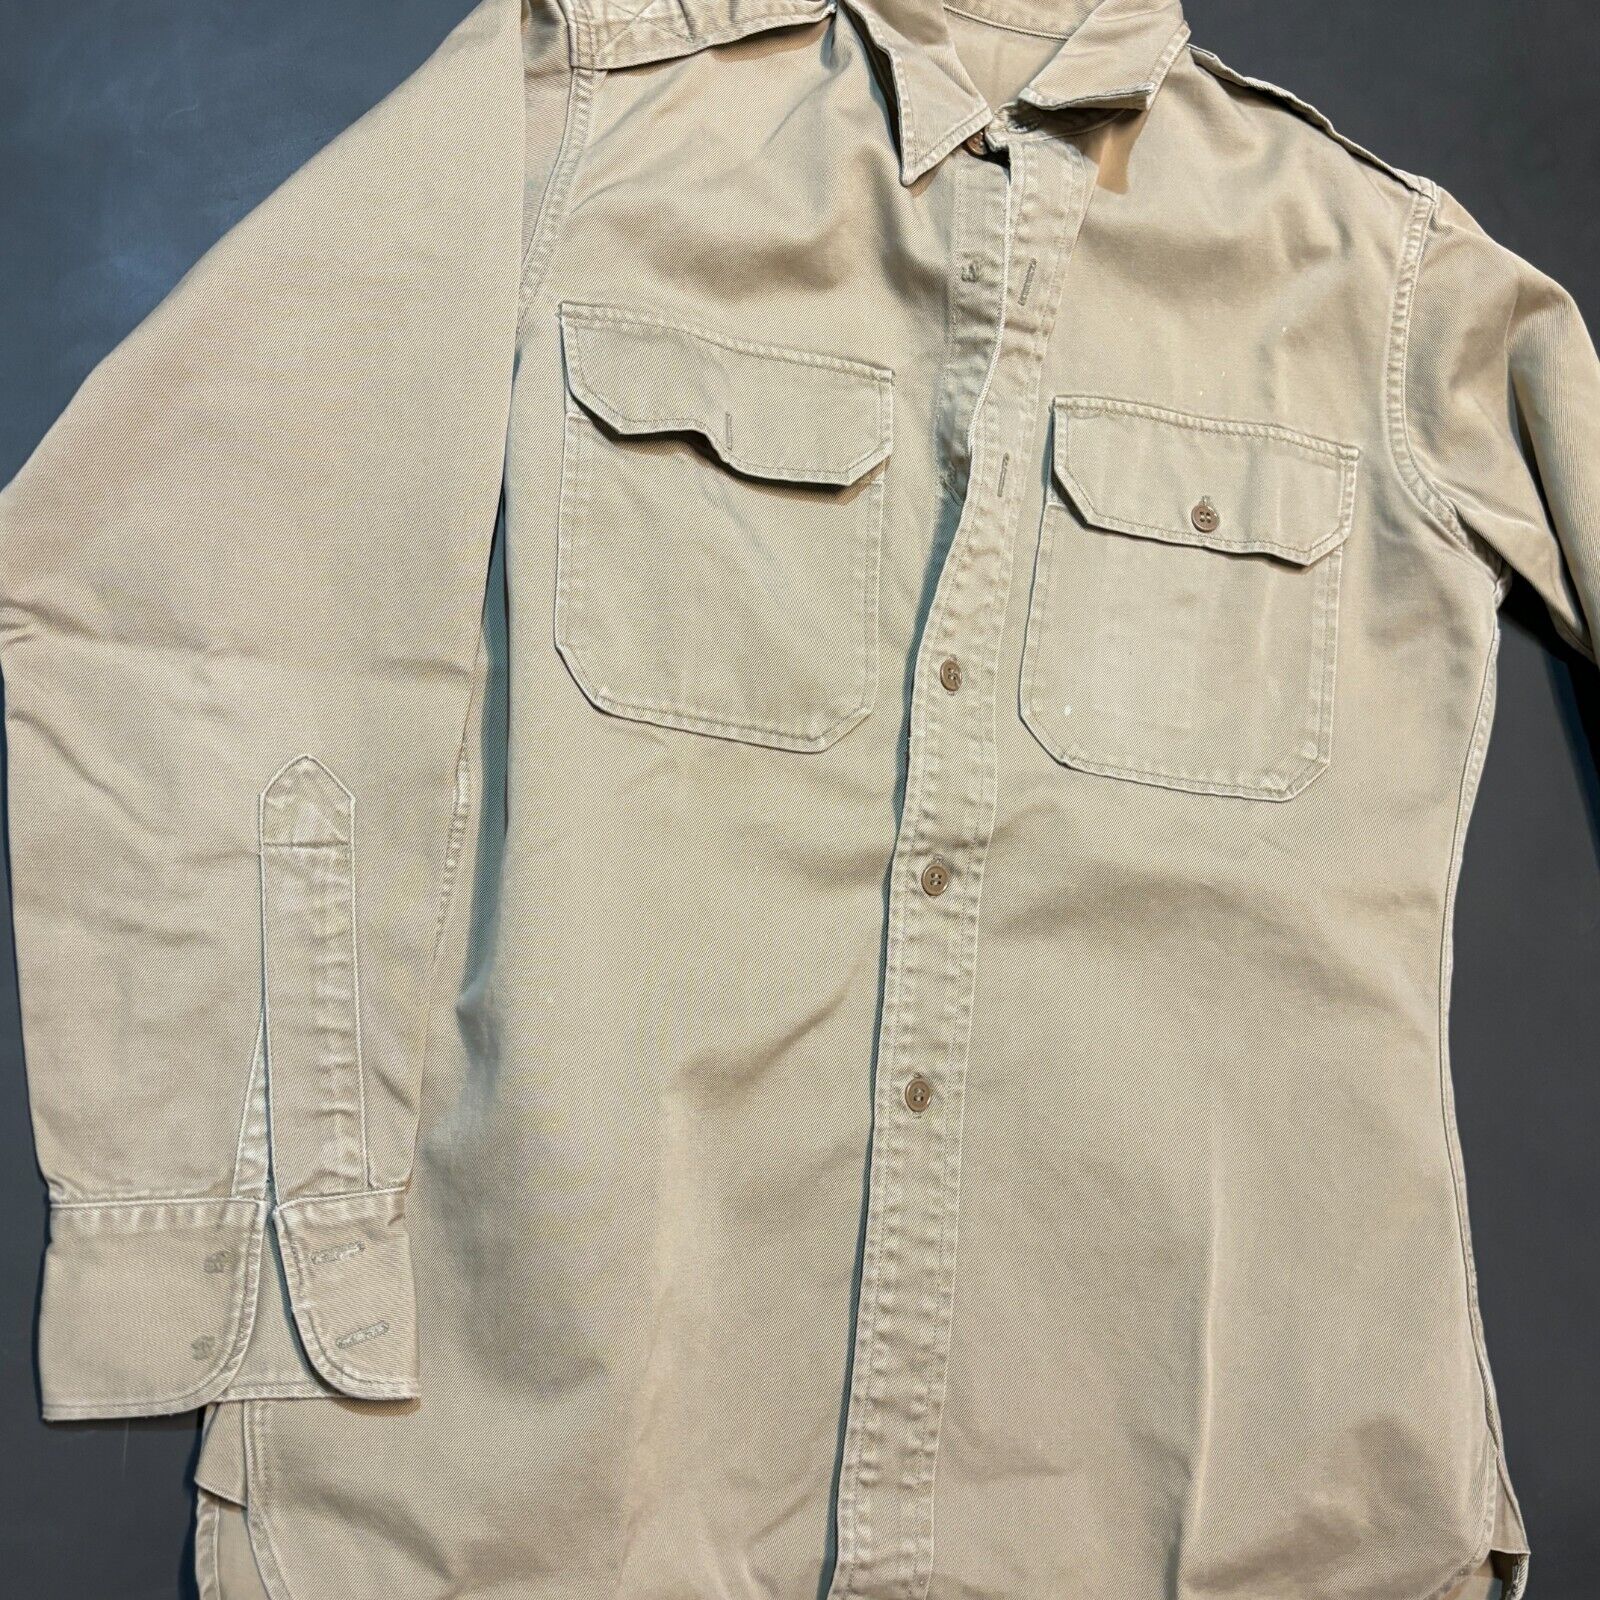 Vintage Military Uniform Army Burown Cotton Button Up Shirt OG Desert Tan